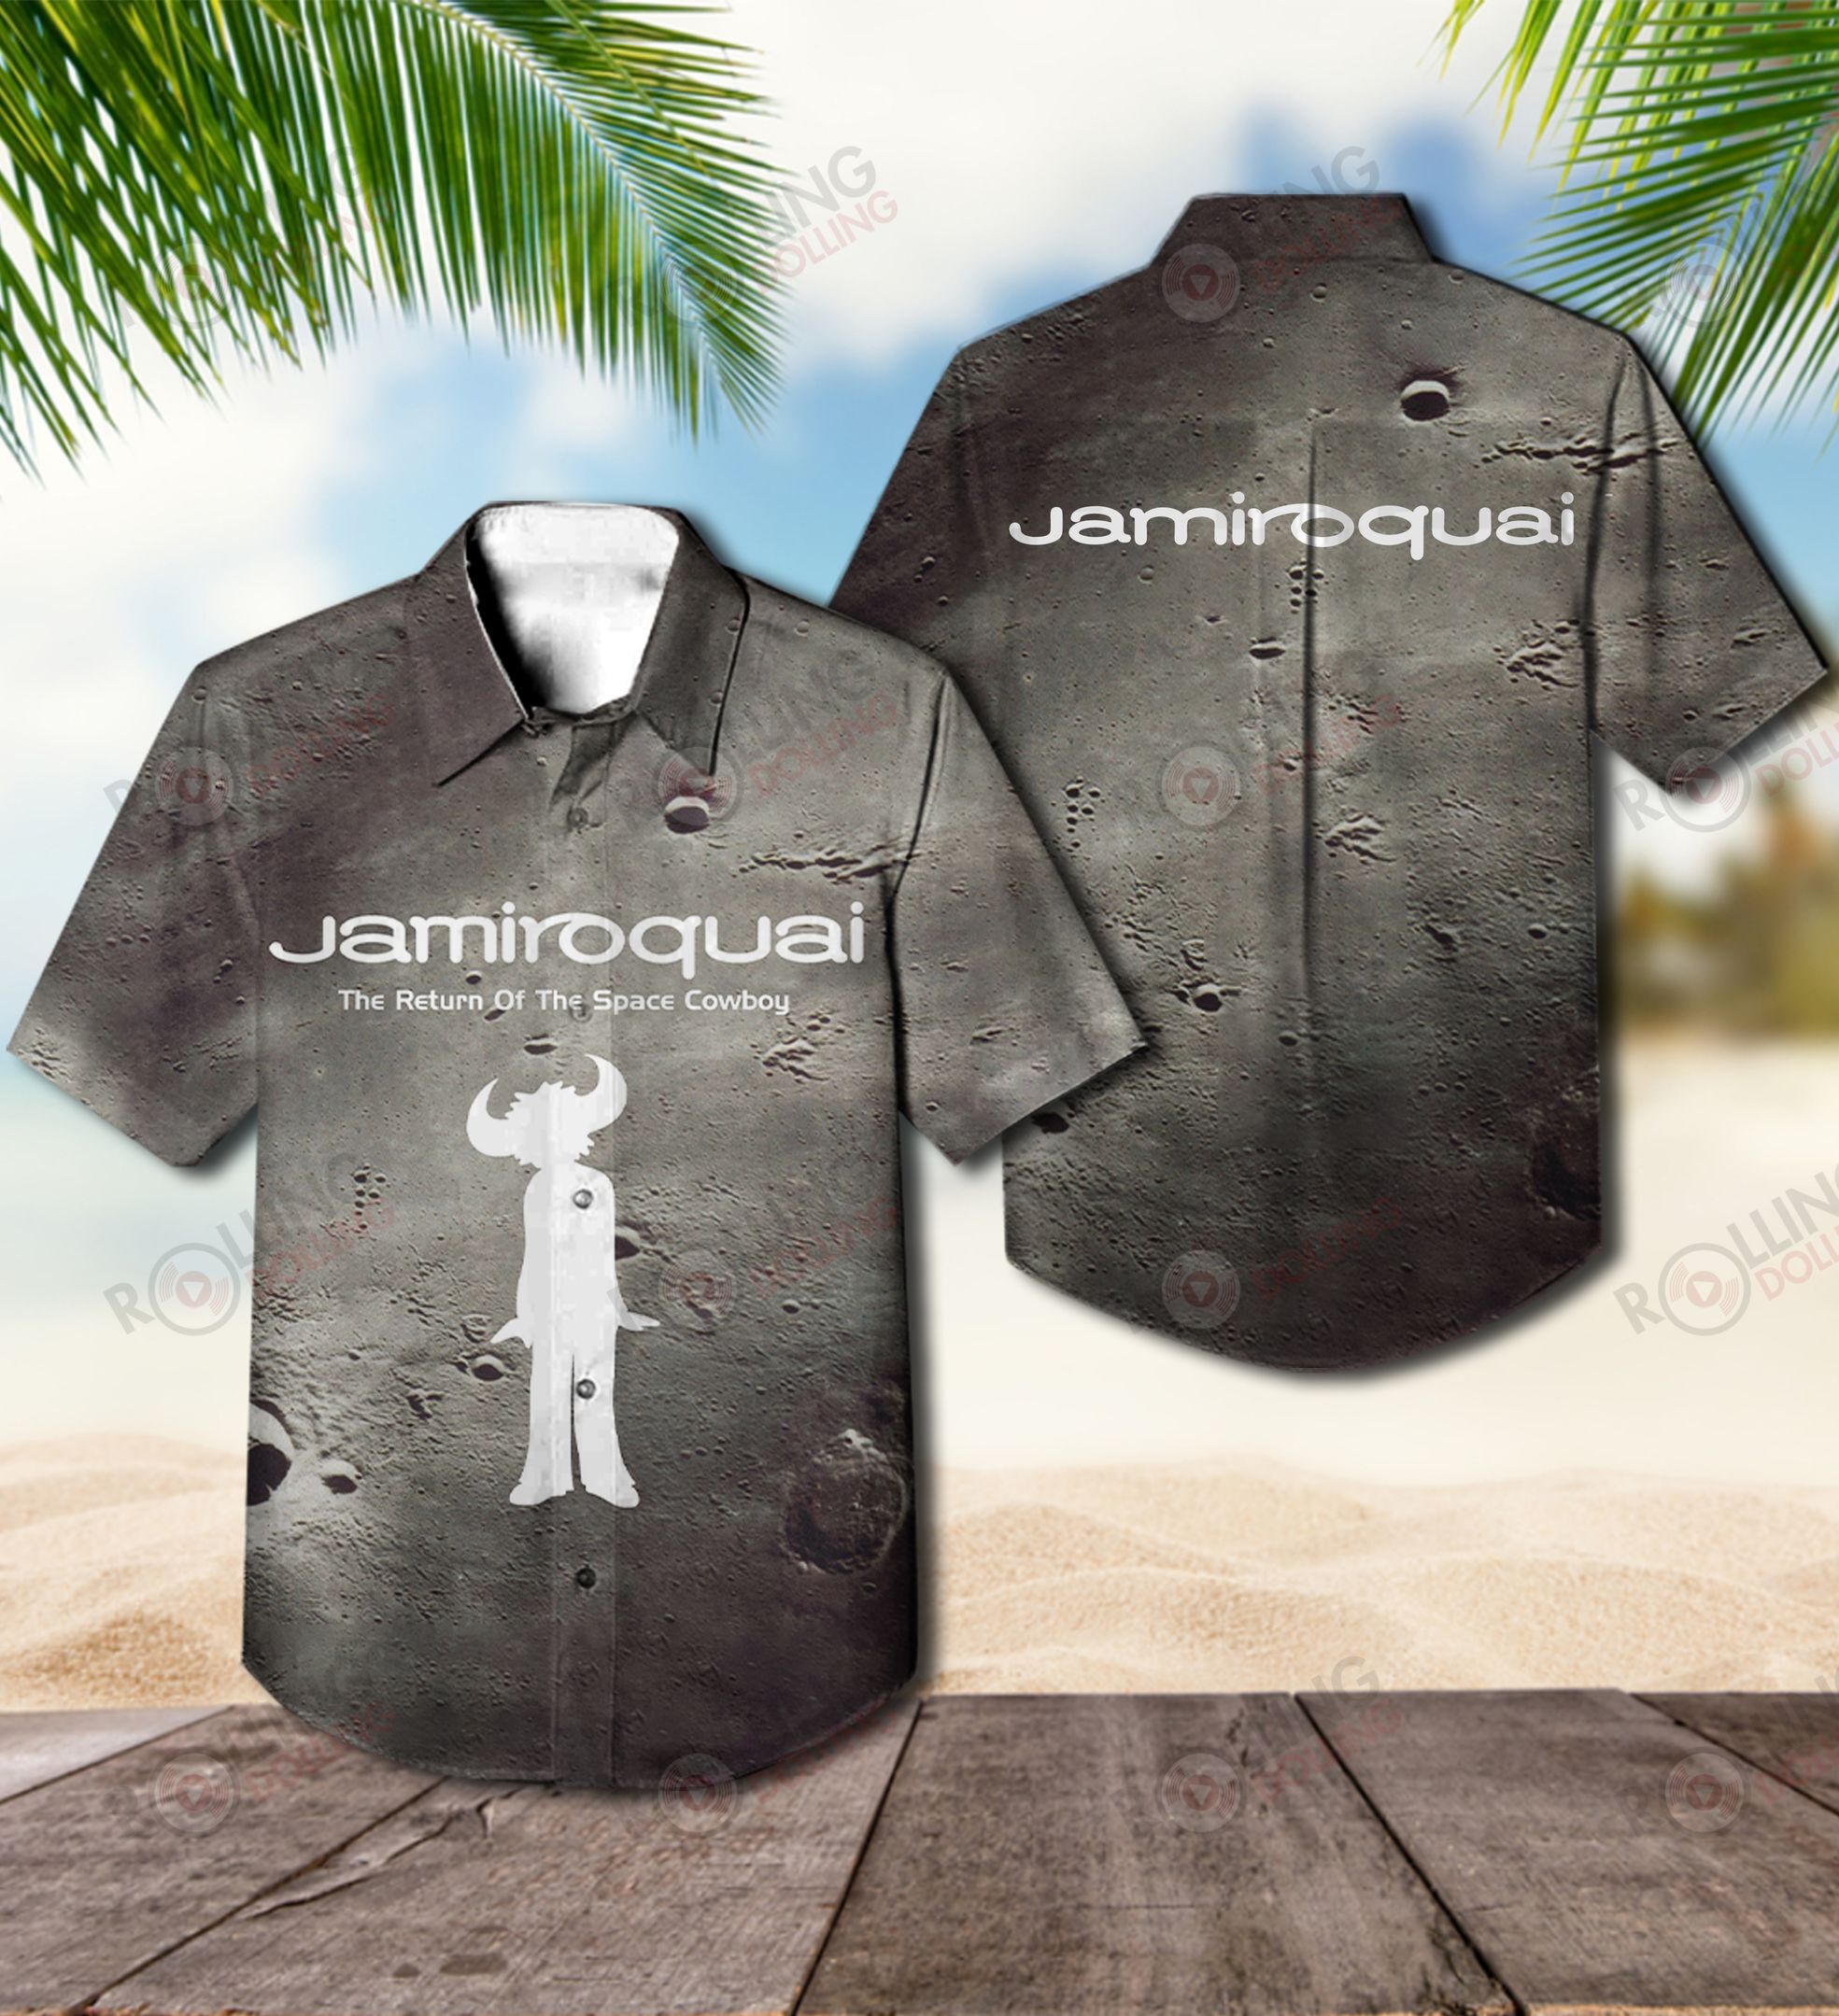 Regardless of their style, you will feel comfortable wearing Hawaiian Shirt 103